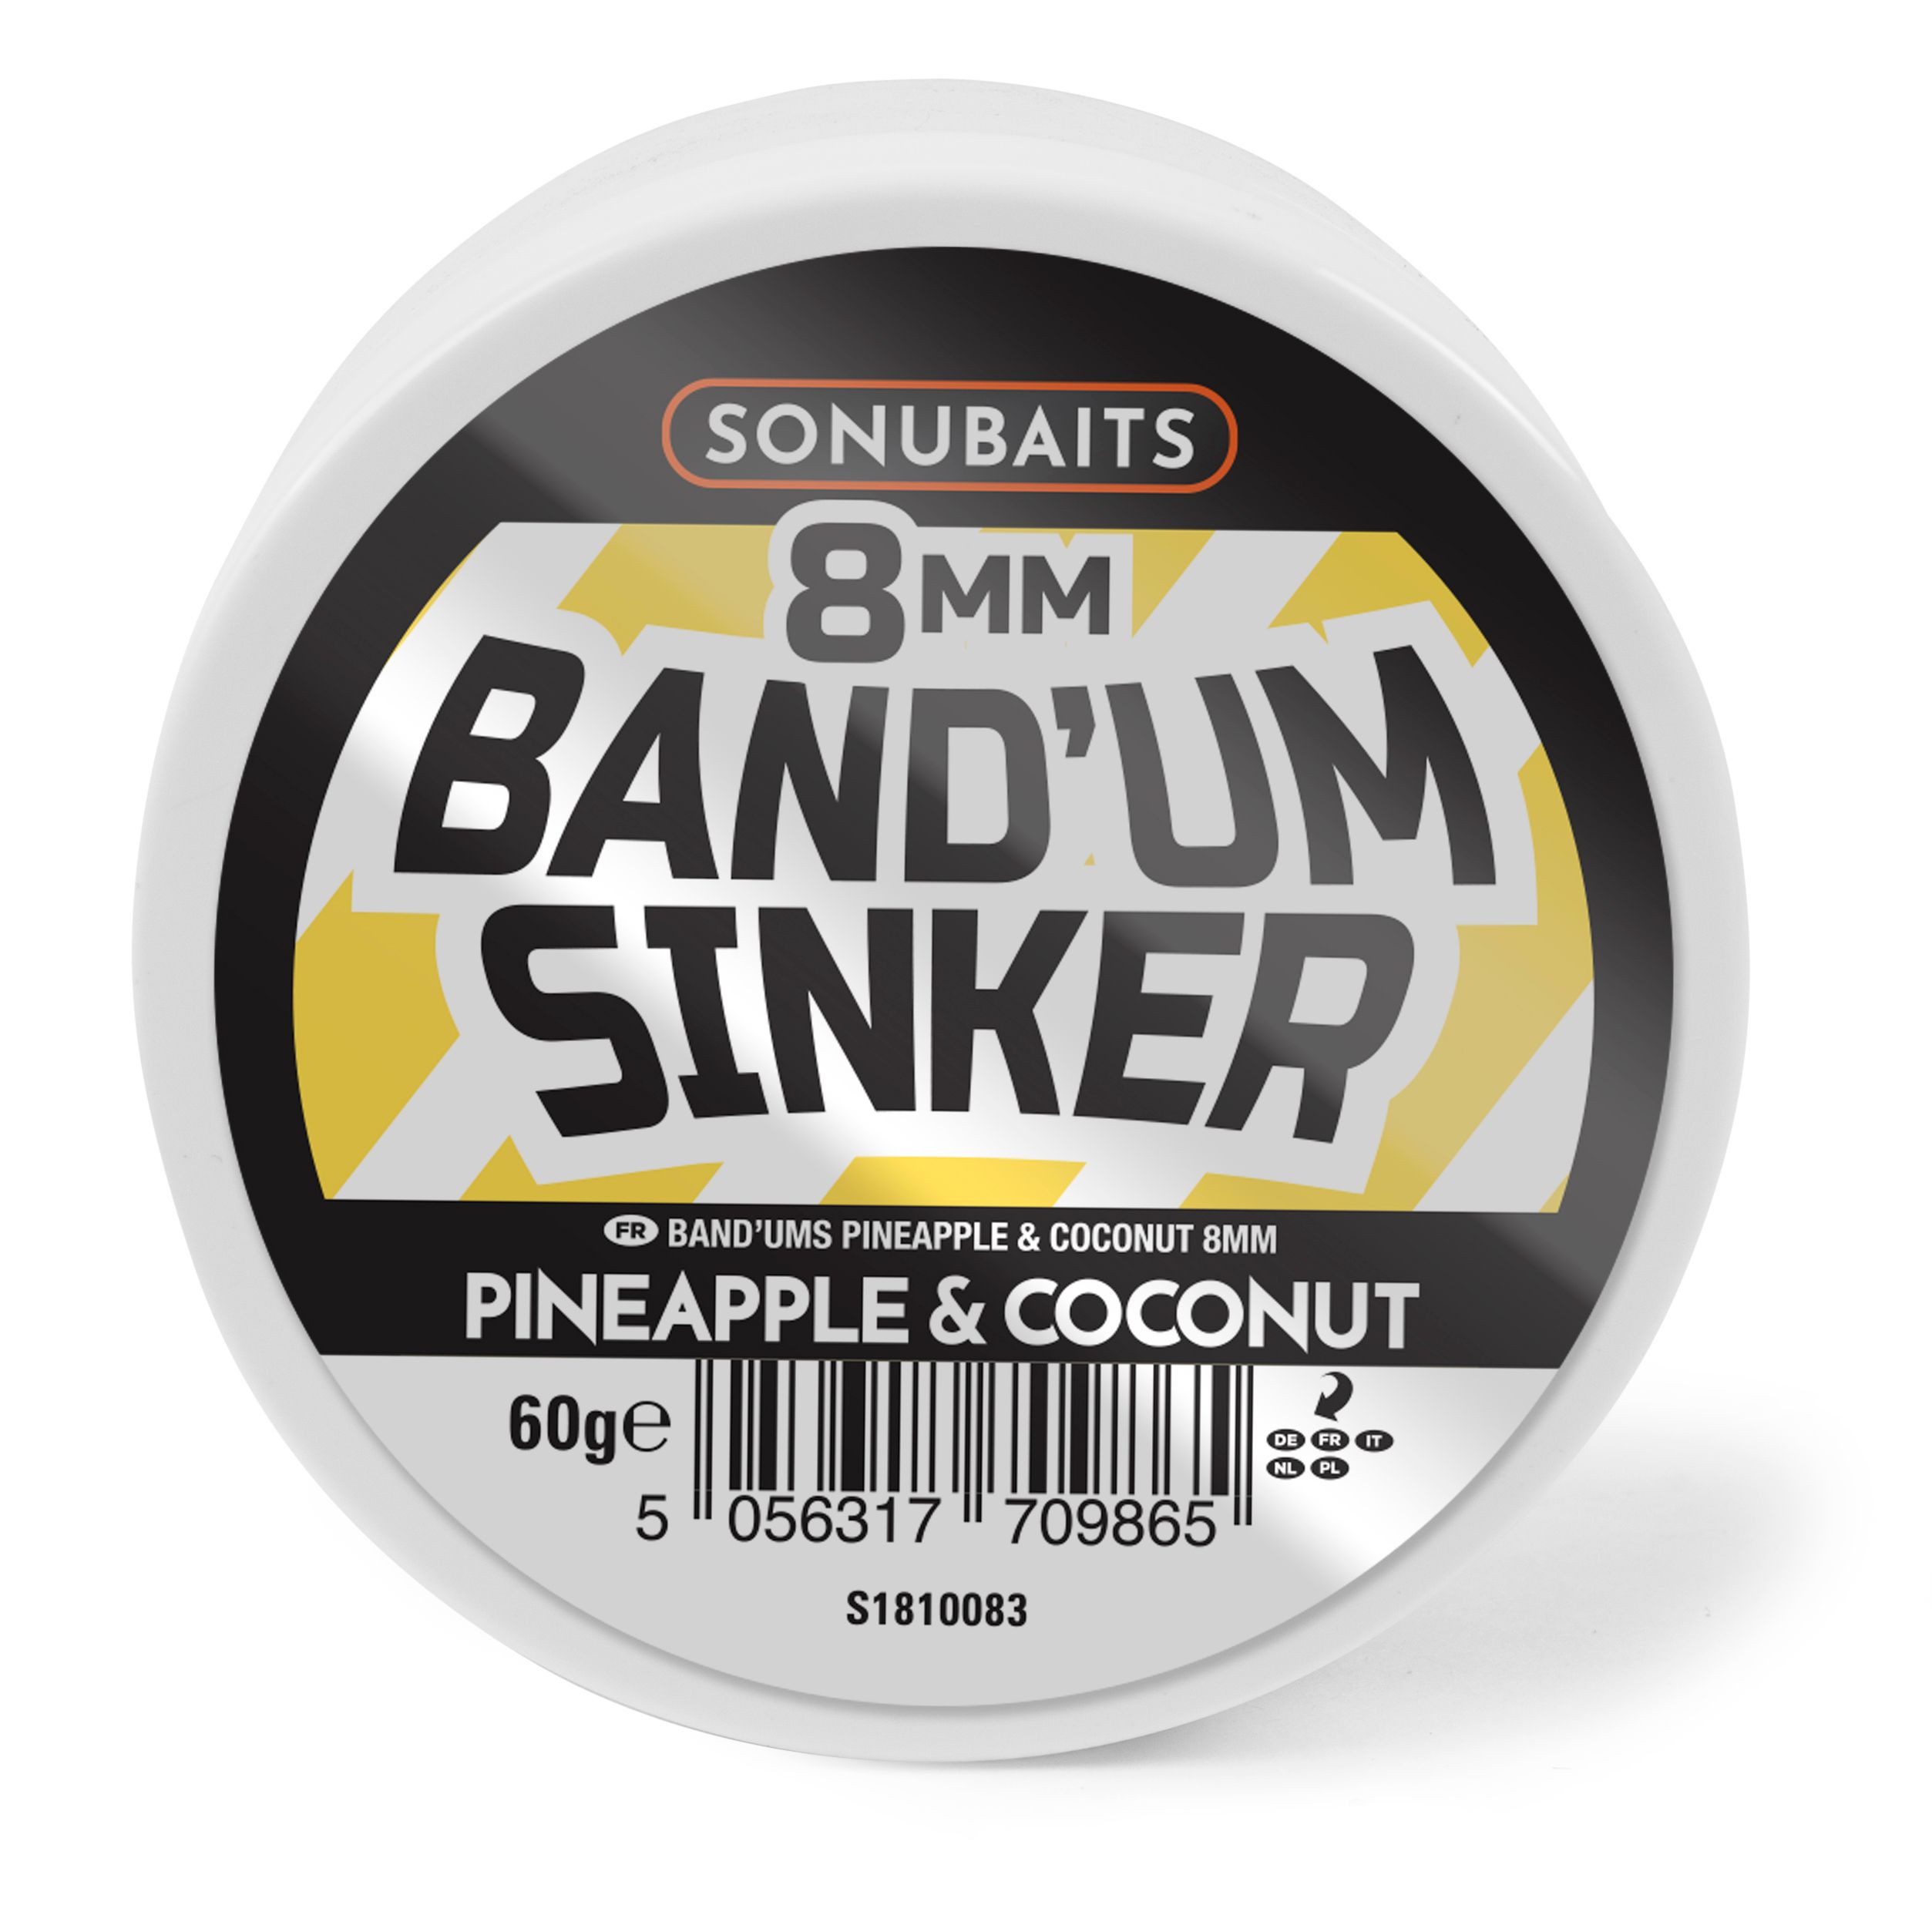 Sonubaits Band'um Sinker Whitefish Boilies 8mm - Pineapple & Coconut